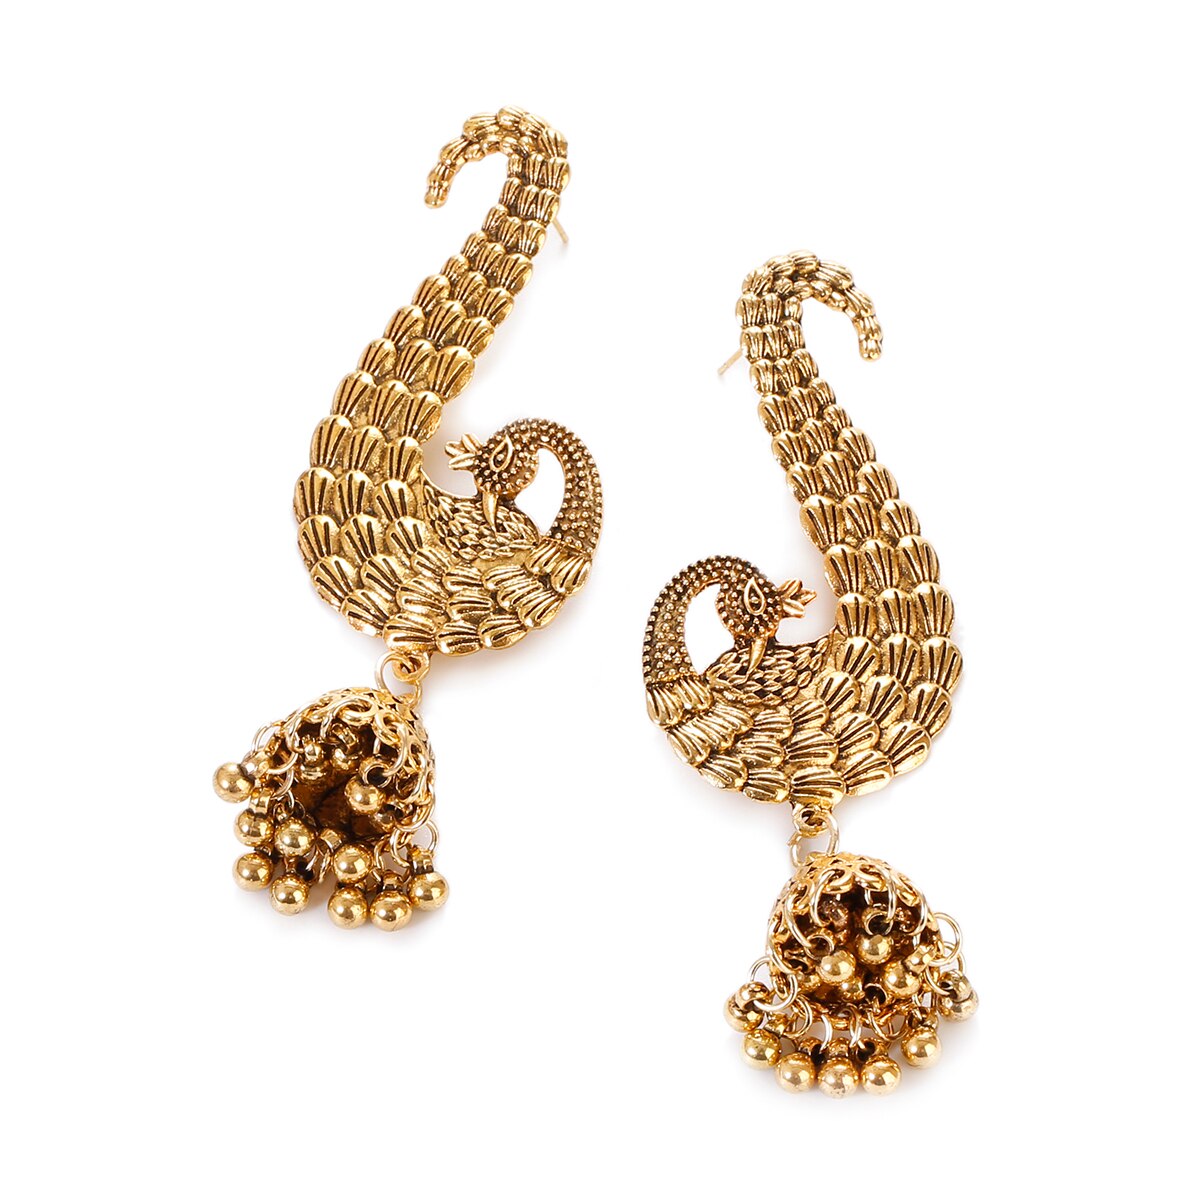 Retro-Luxury-Peacock-Indian-Earrings-For-Women-Ethnic-Gold-Color-Earrings-Piercing-Wedding-Jewelry-A-1005004007674459-5